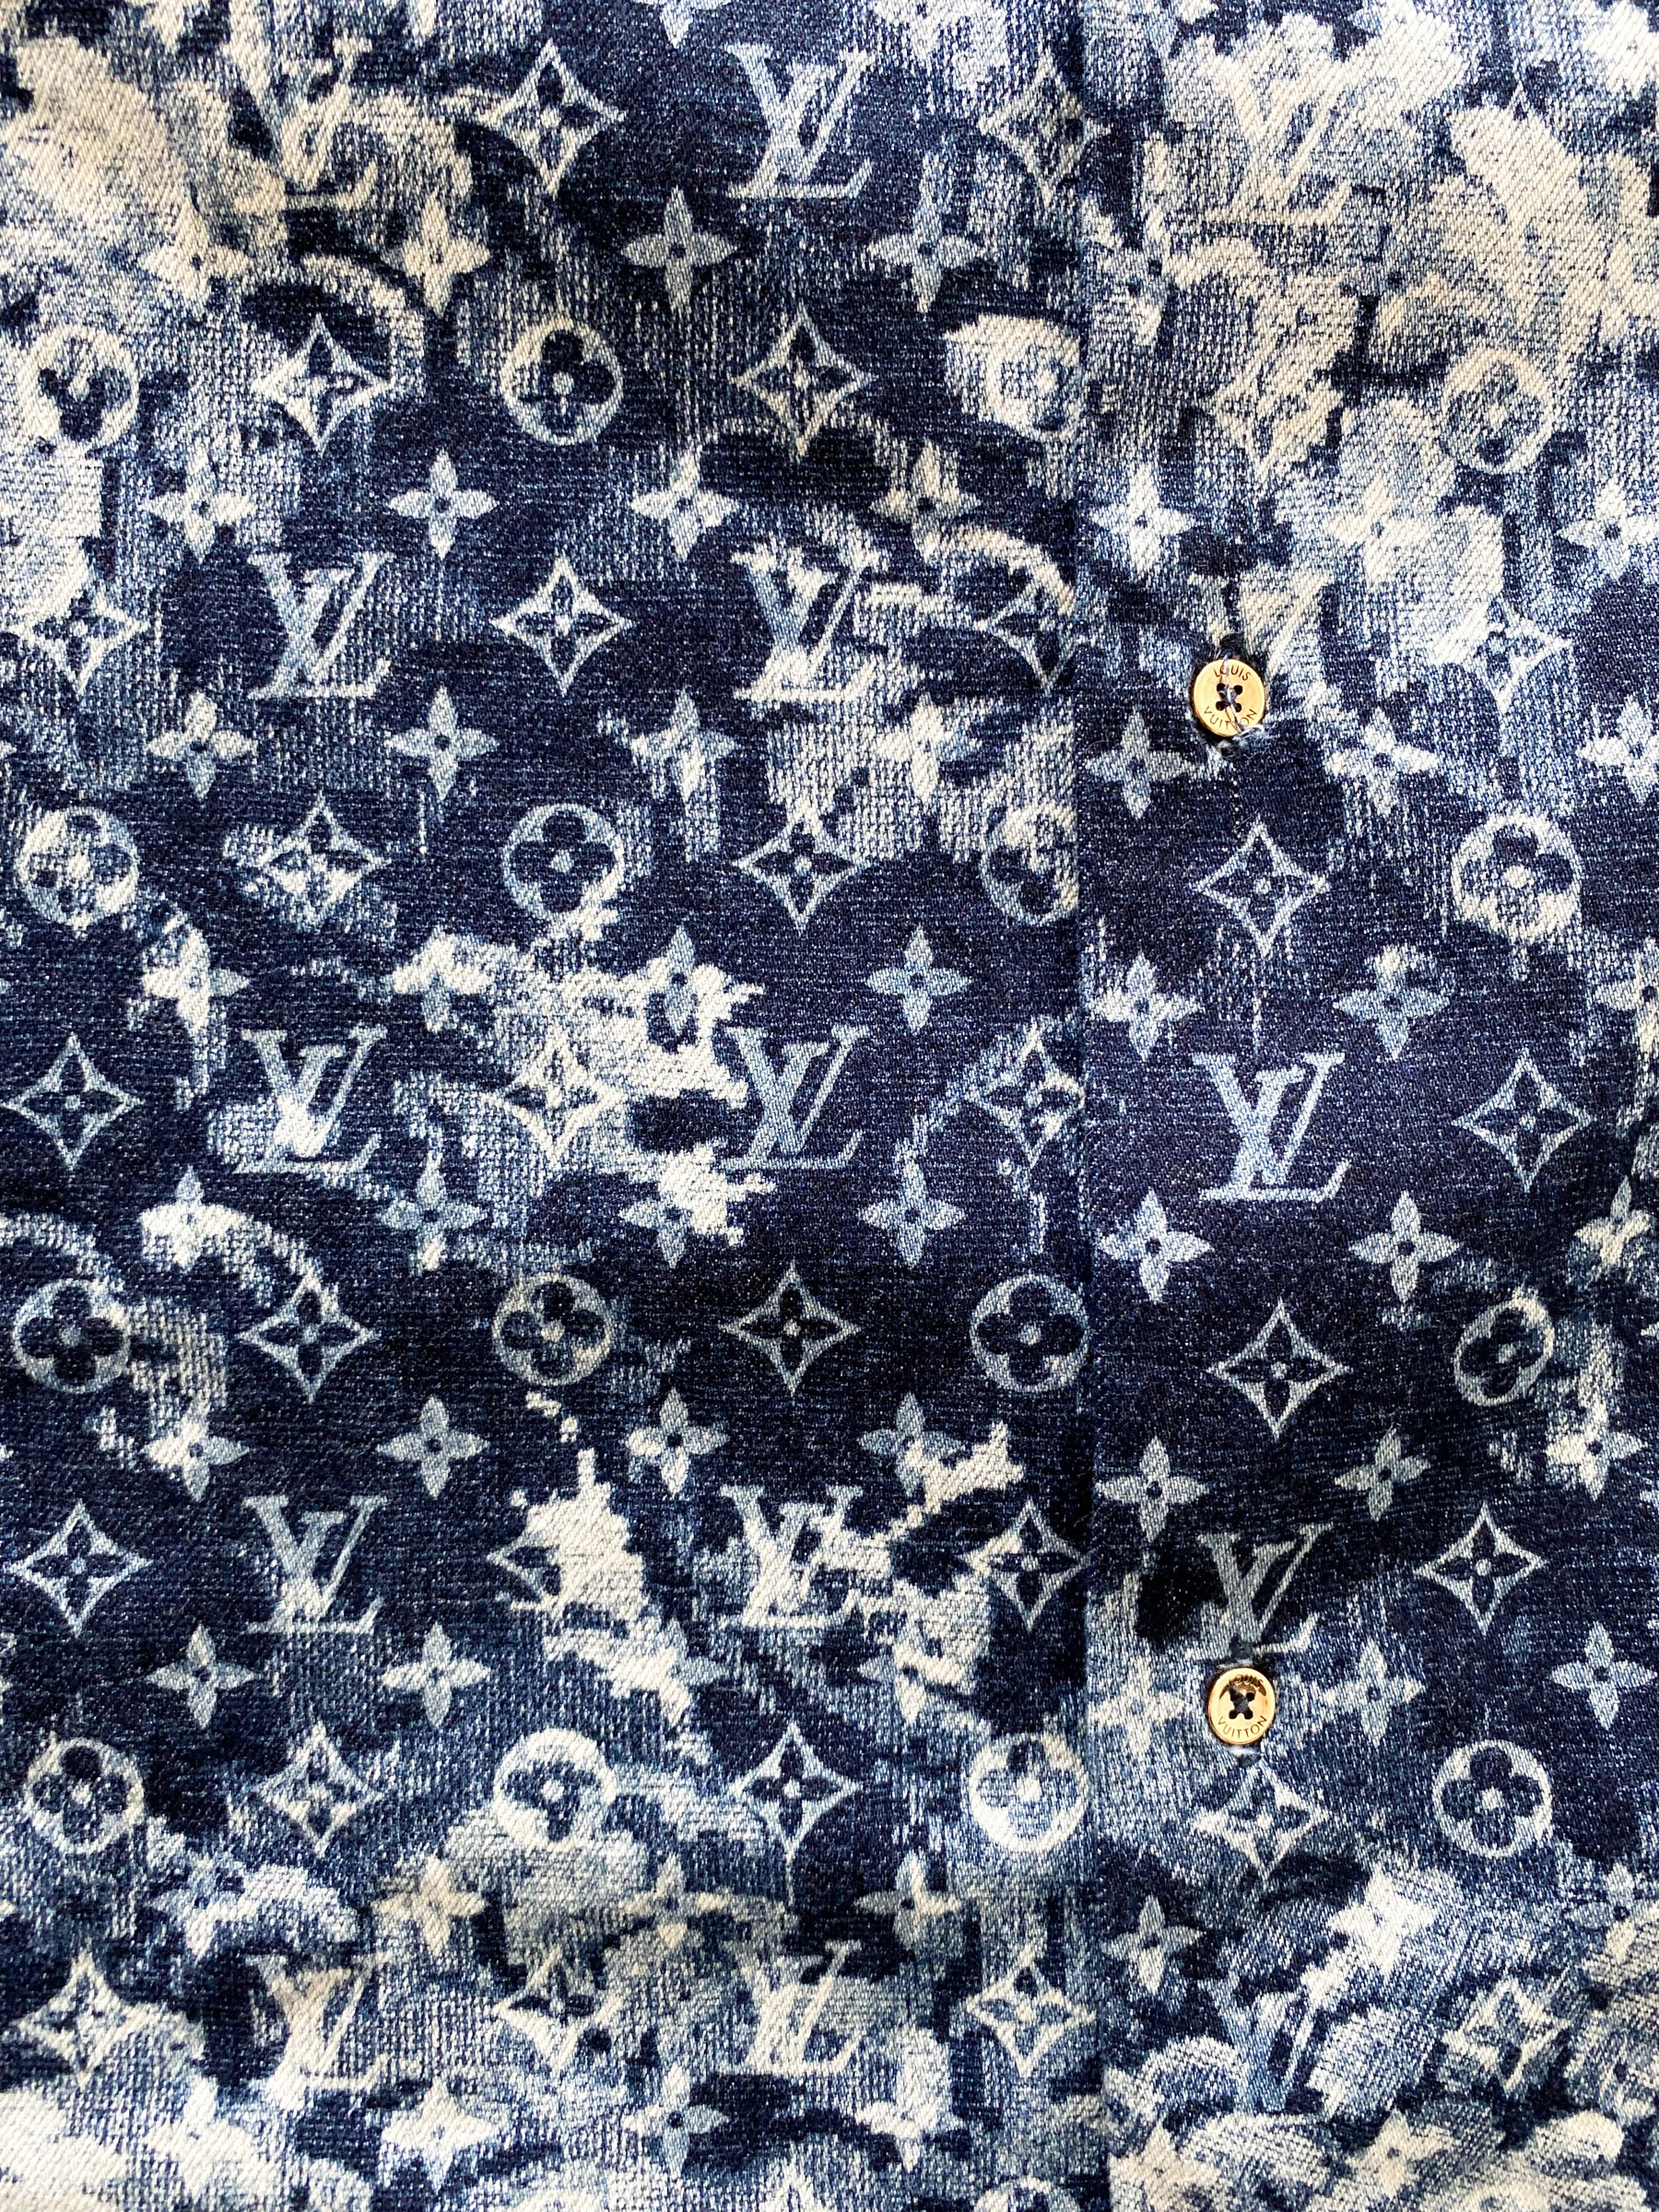 Louis Vuitton Monogram Tapestry Button Up Shirt